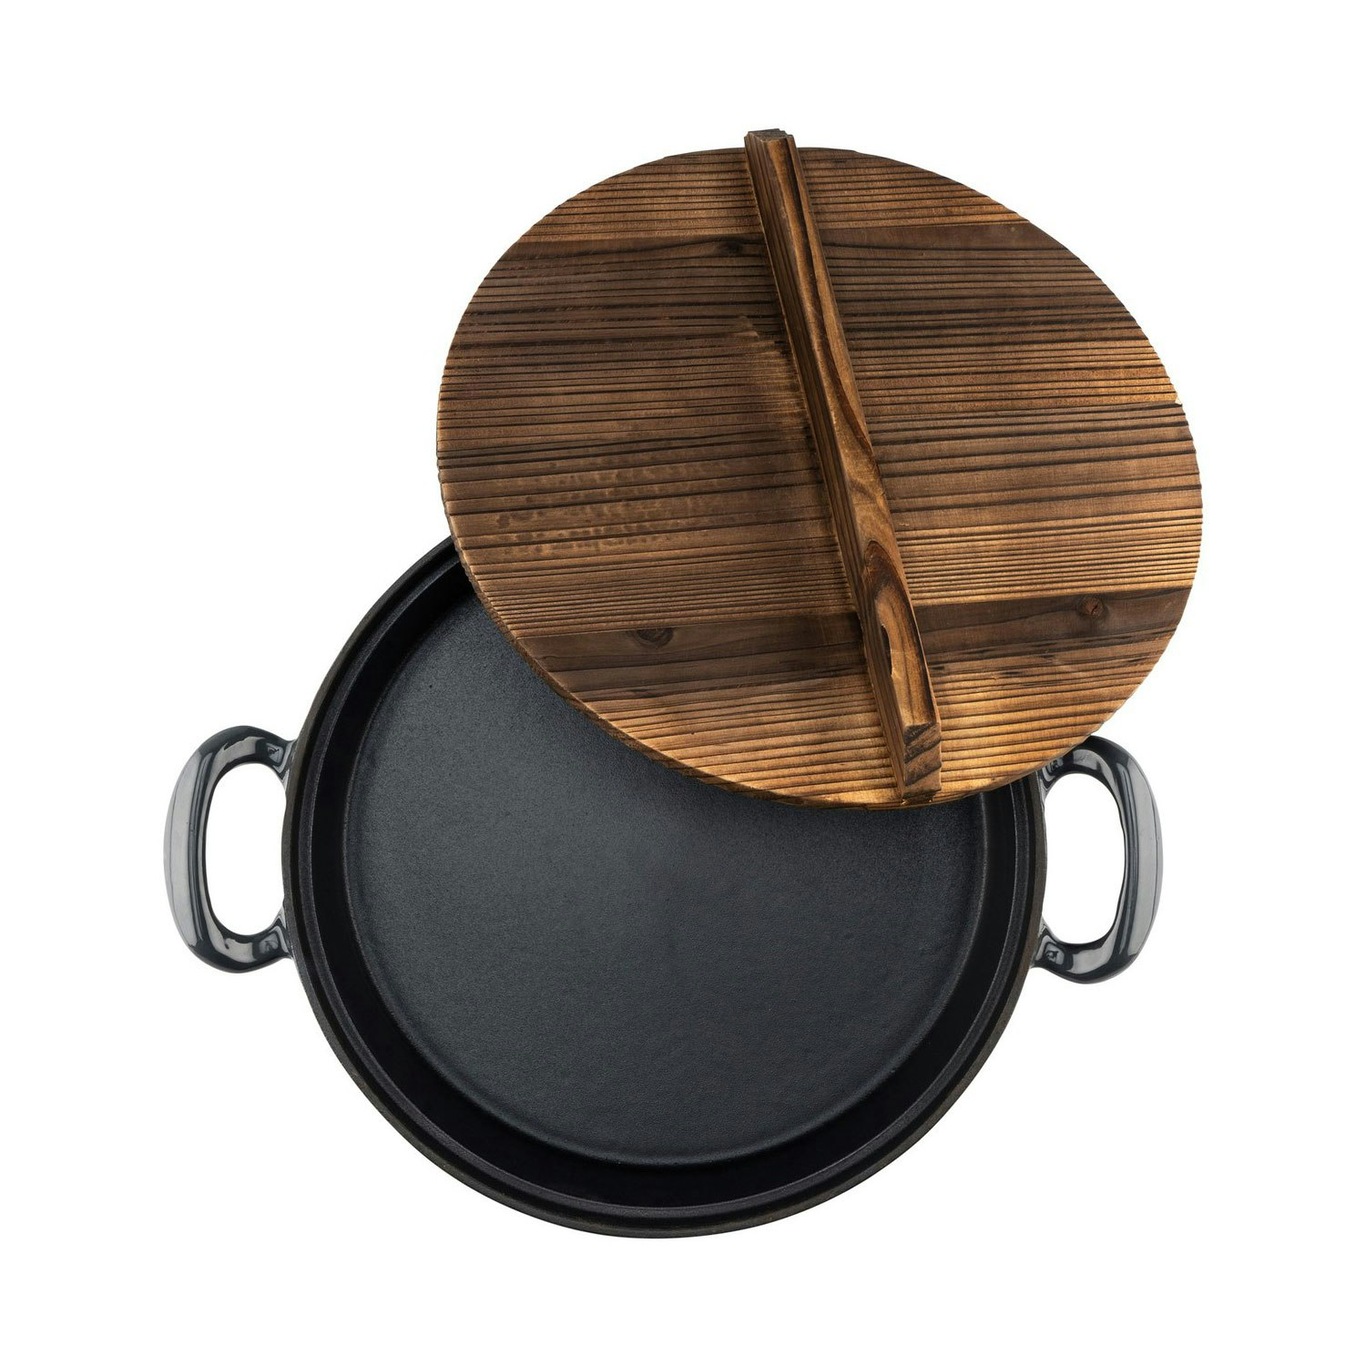 https://royaldesign.com/image/2/heirol-big-ear-frying-pan-cast-iron-with-wood-lid-30-cm-4-l-2?w=800&quality=80